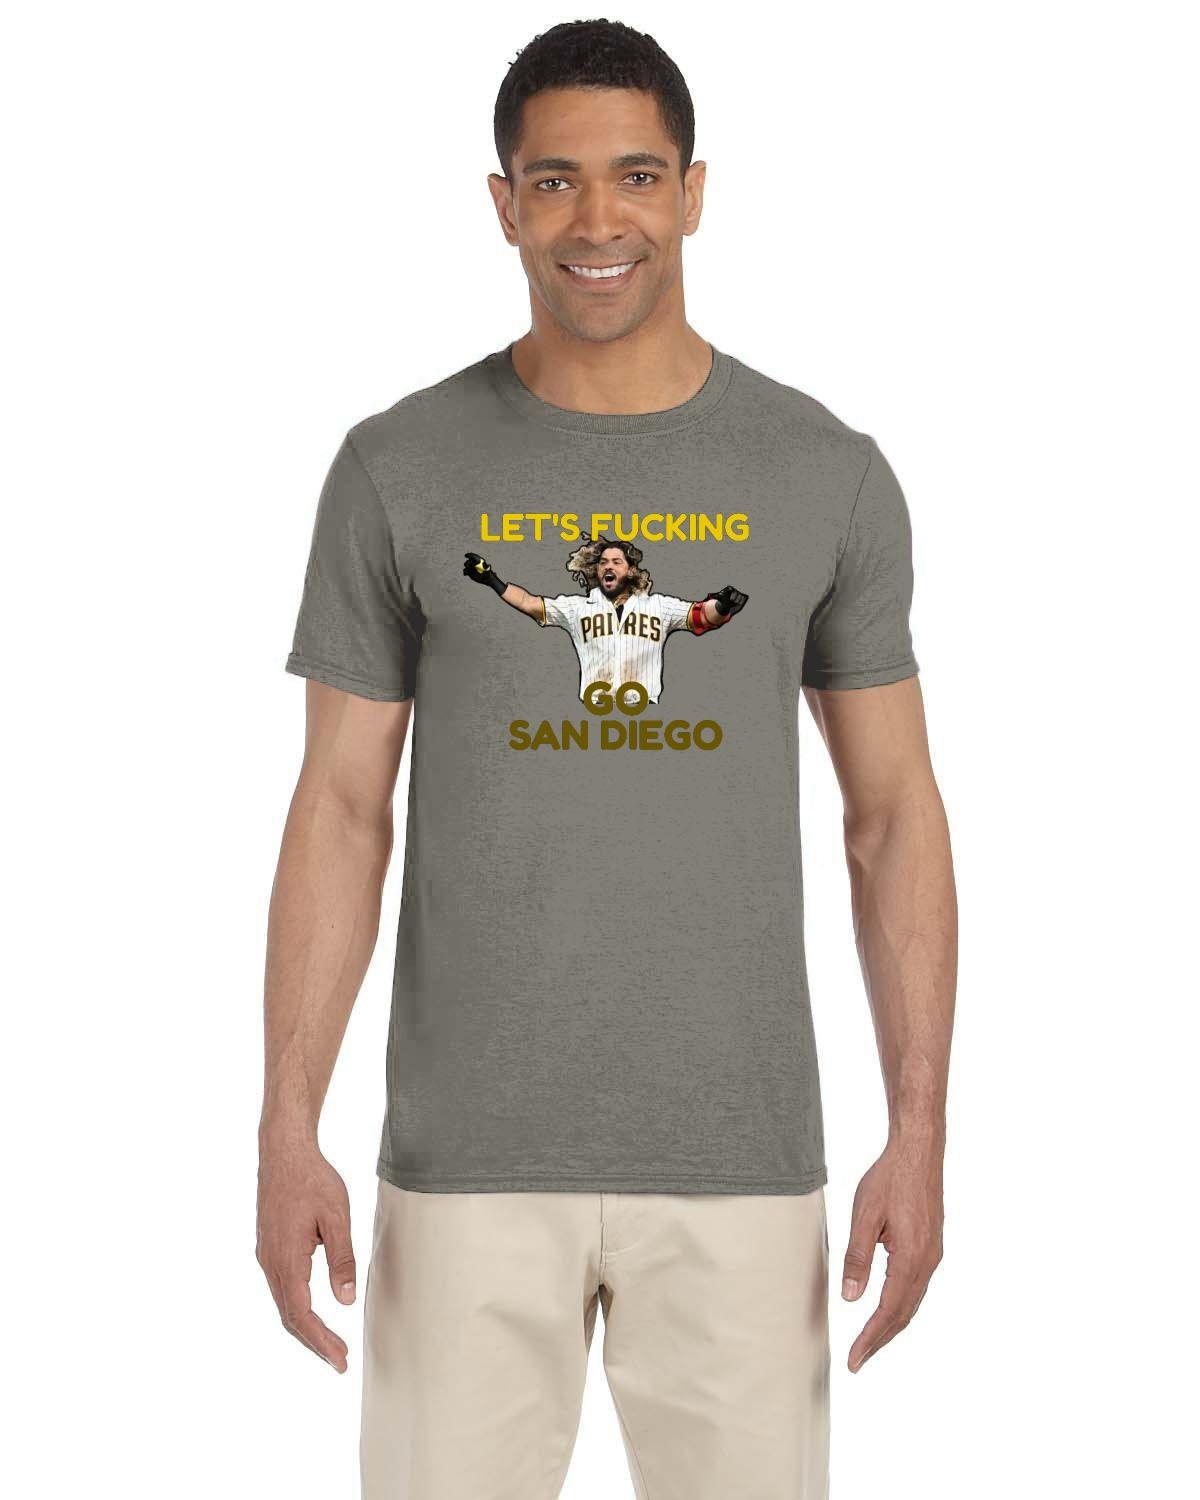 Discover Jorge Alfaro LFG San Diego Unisex Adult Softstyle T-Shirt